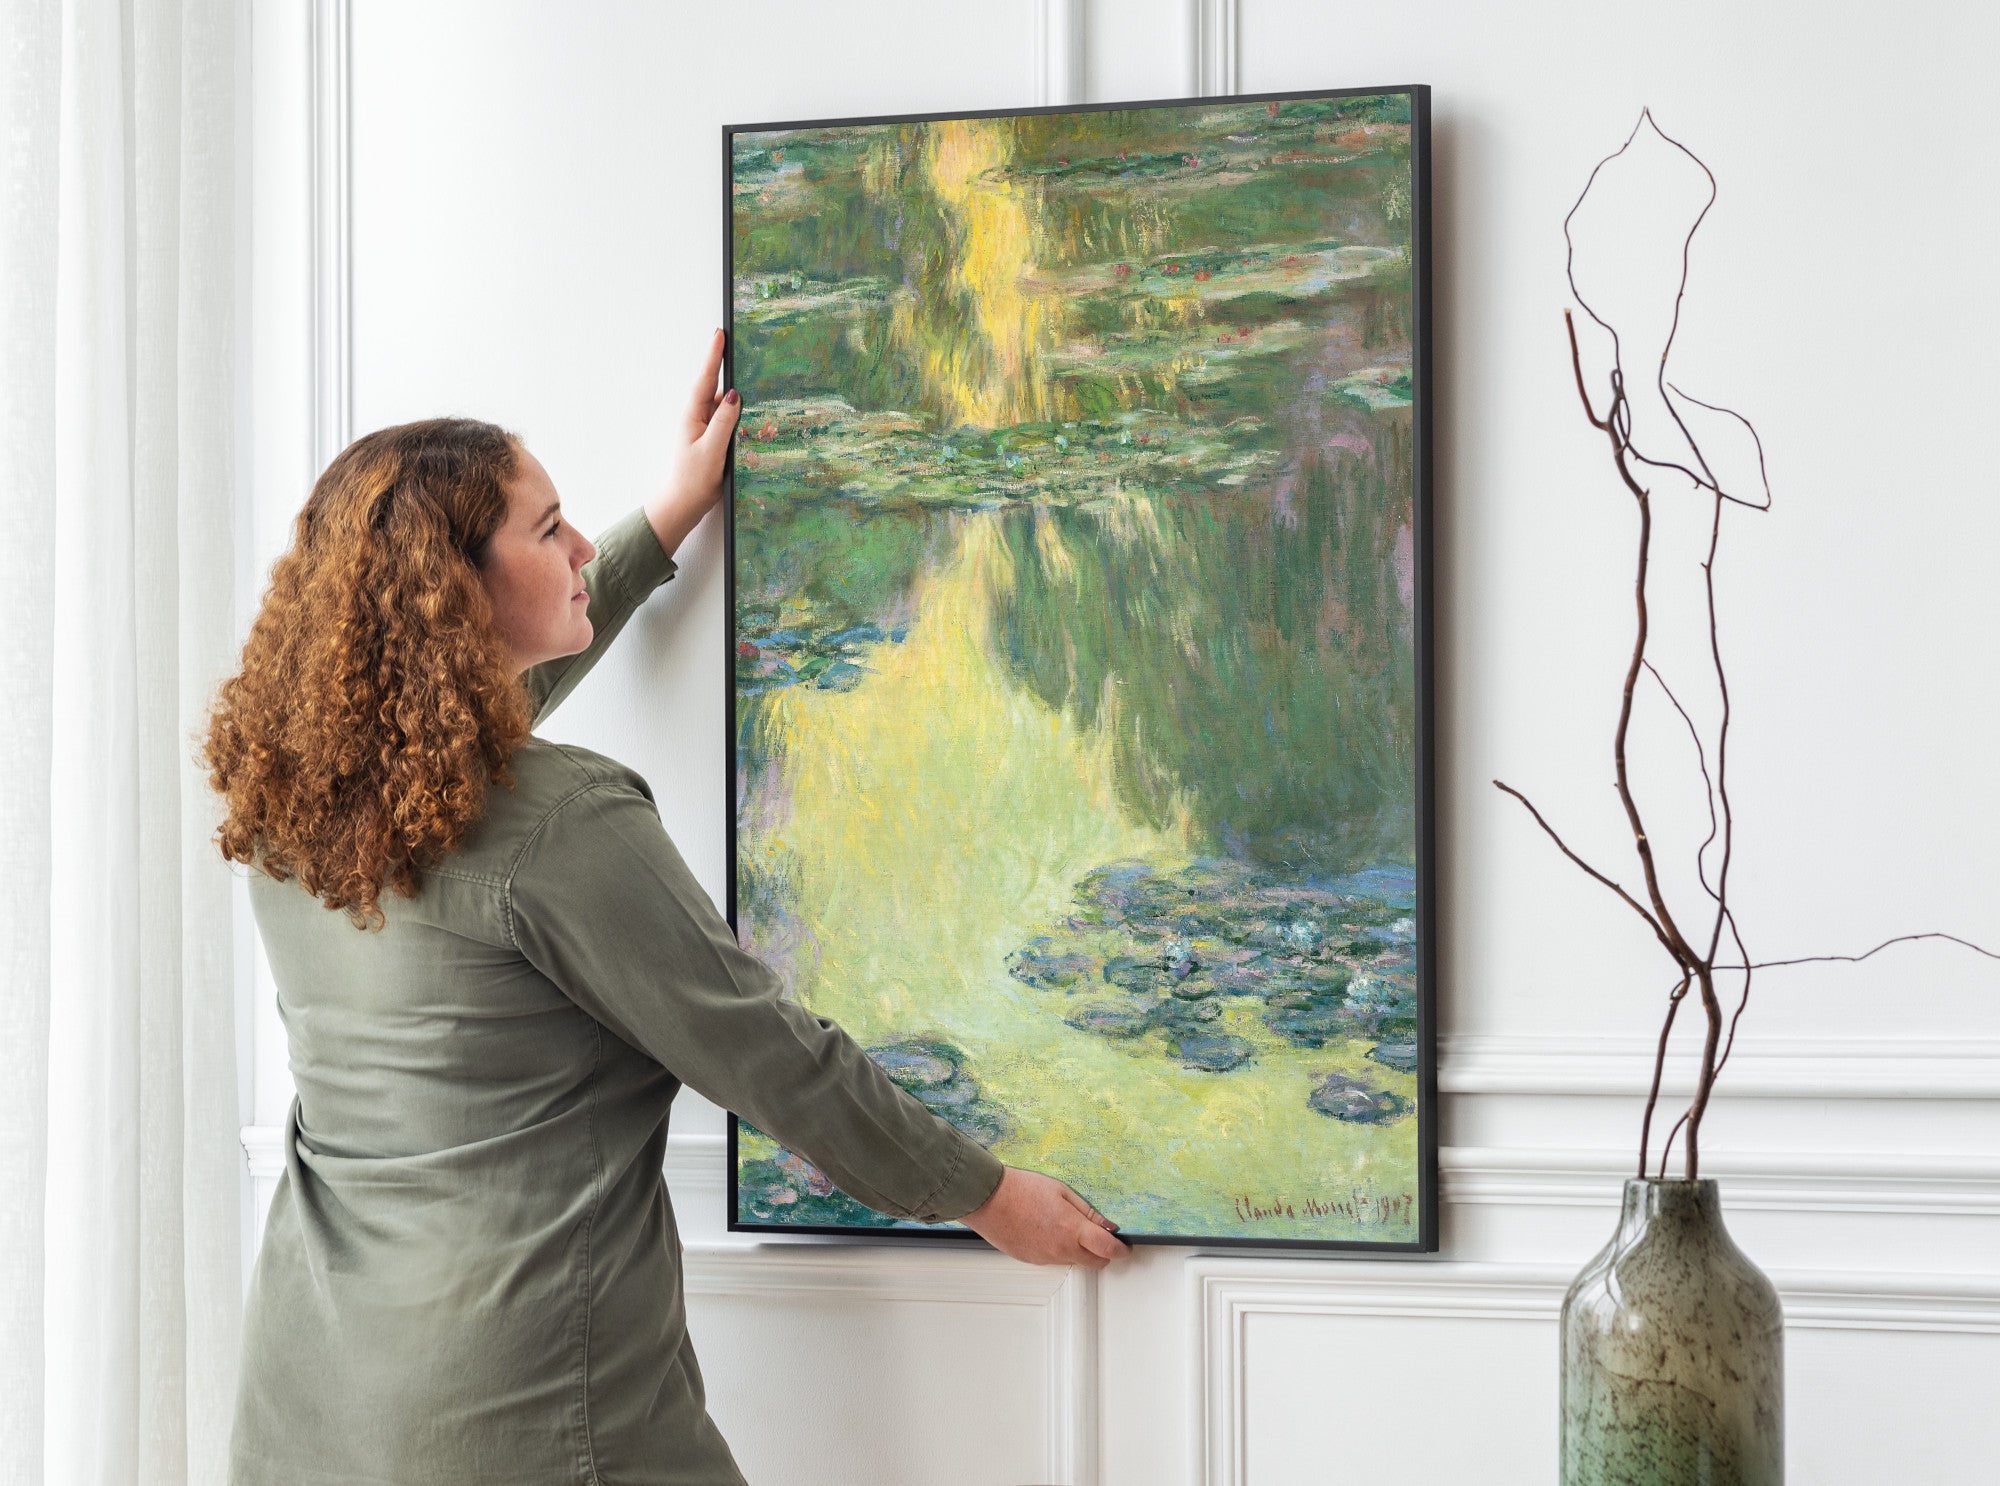 Claude Monet, Water Lilies, Canvas Reproduction